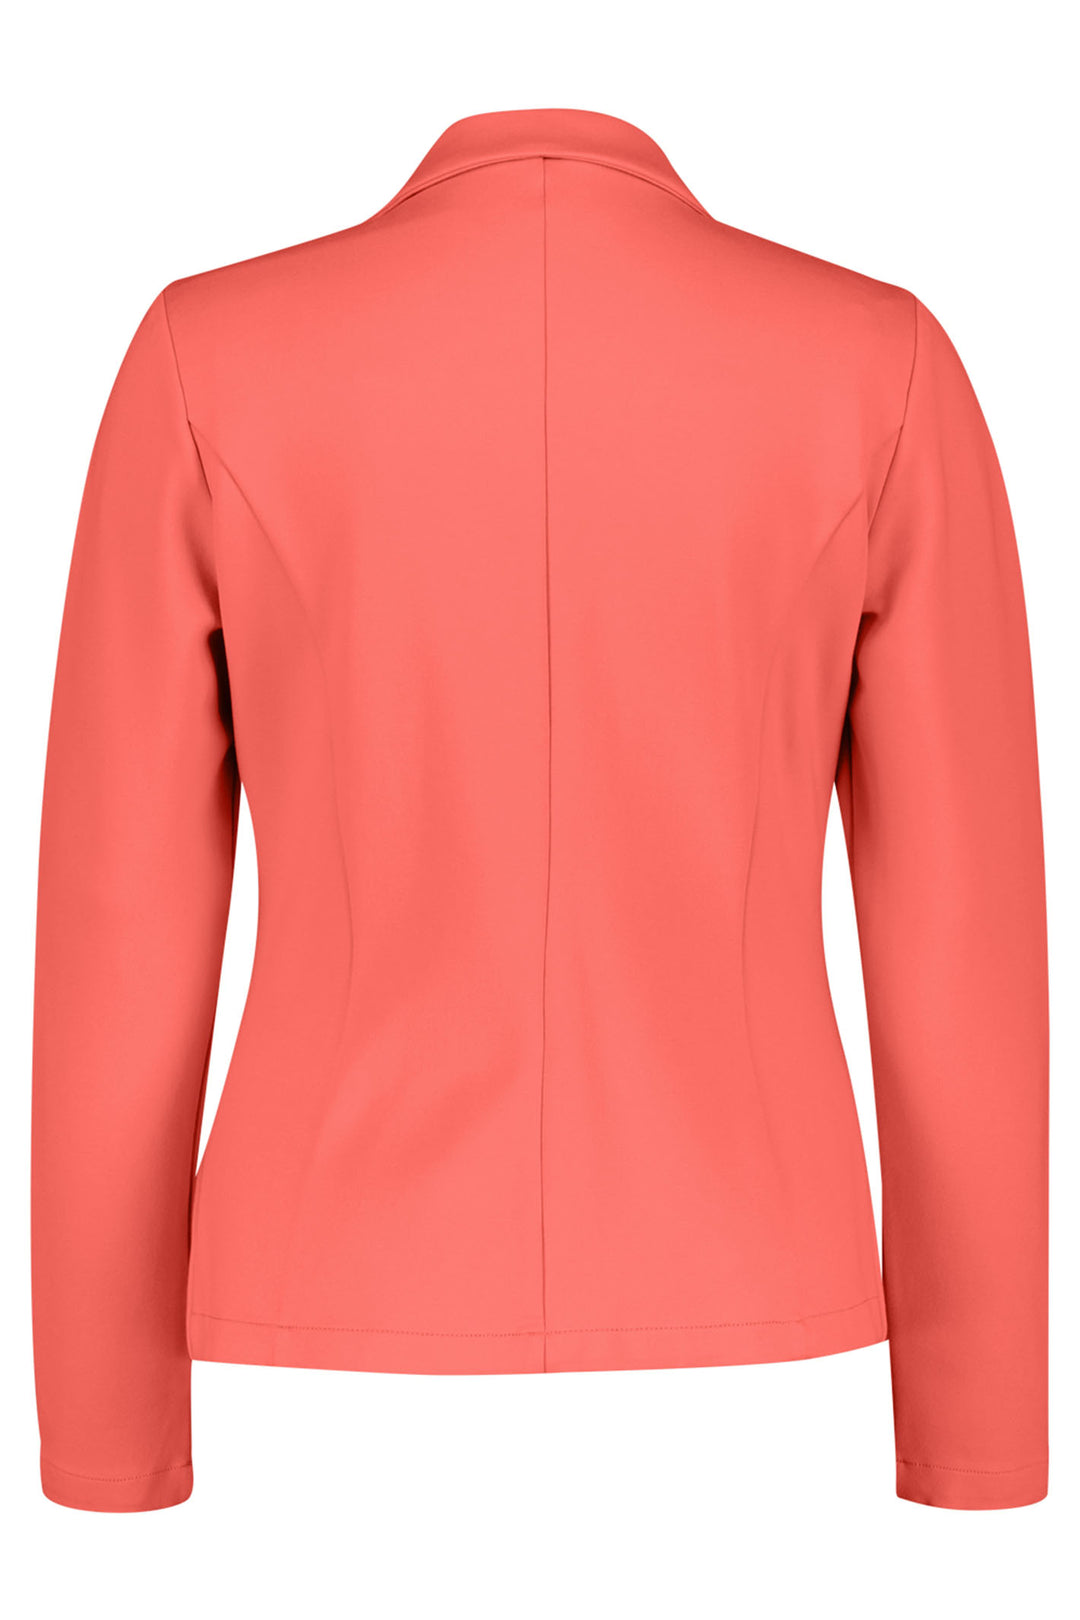 Red Button SRB4213 Flamingo Coral Two Button Blazer Jacket - Olivia Grace Fashion